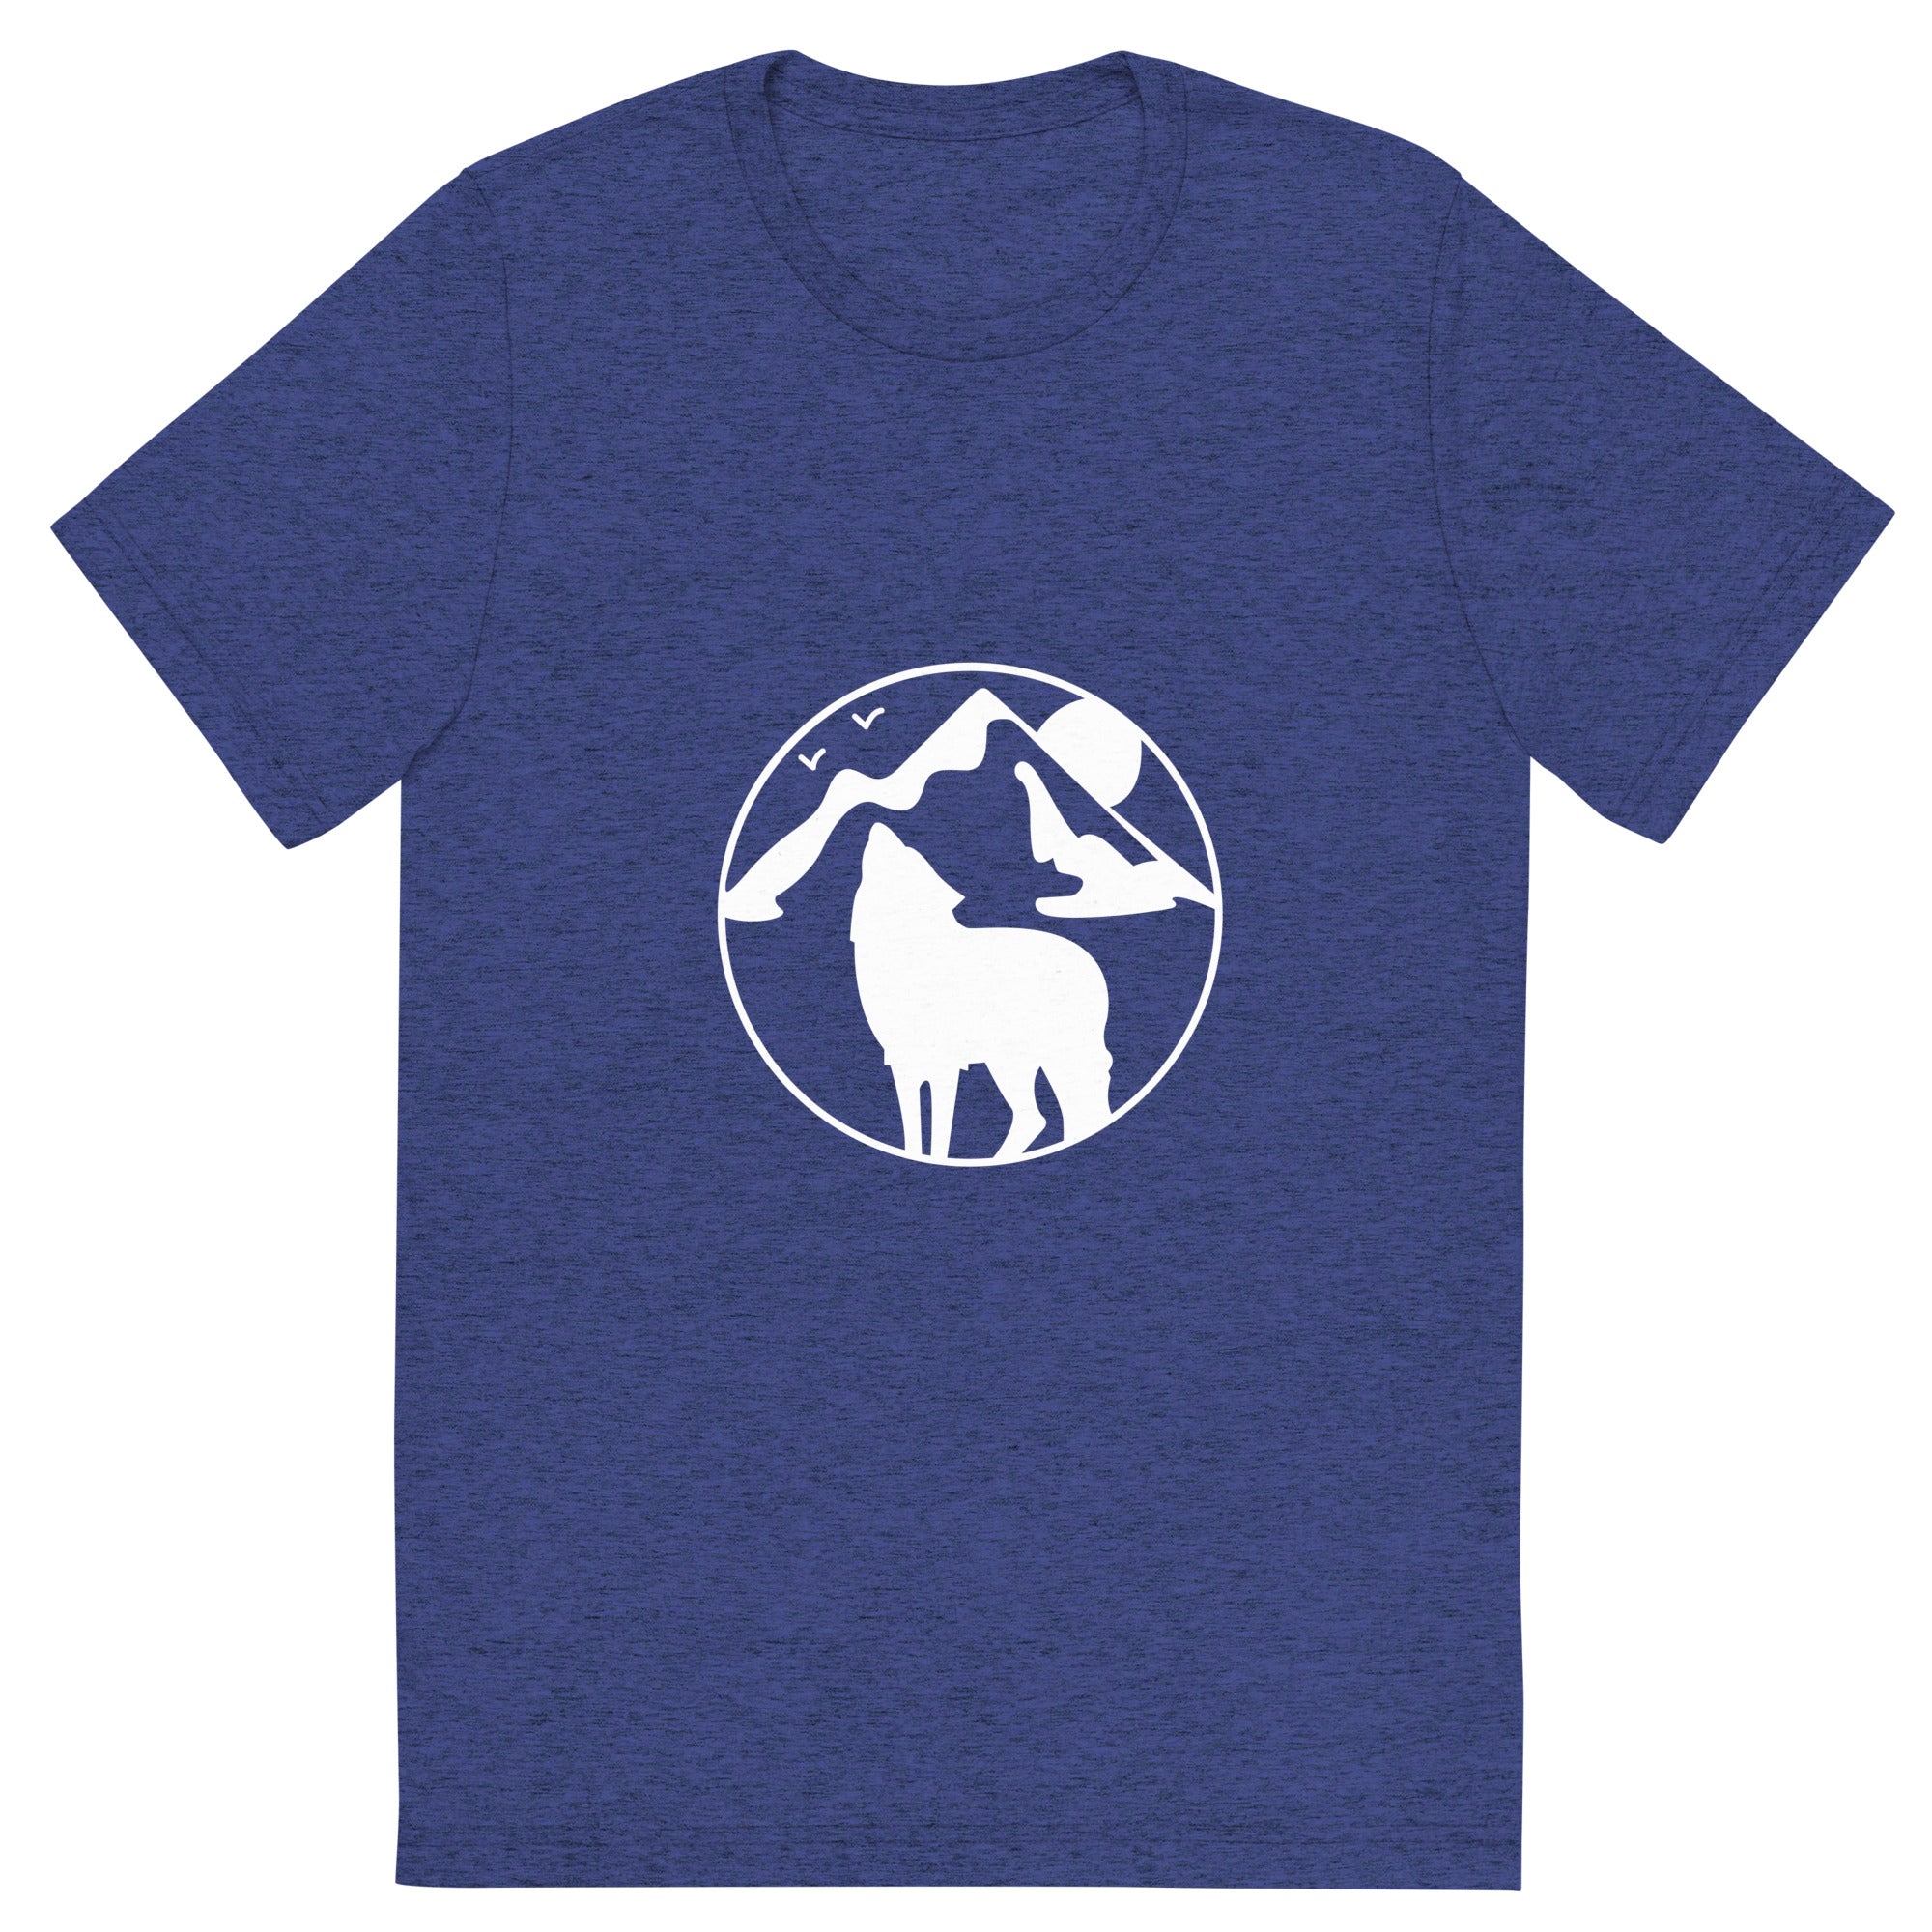 eco-future short sleeve t-shirt